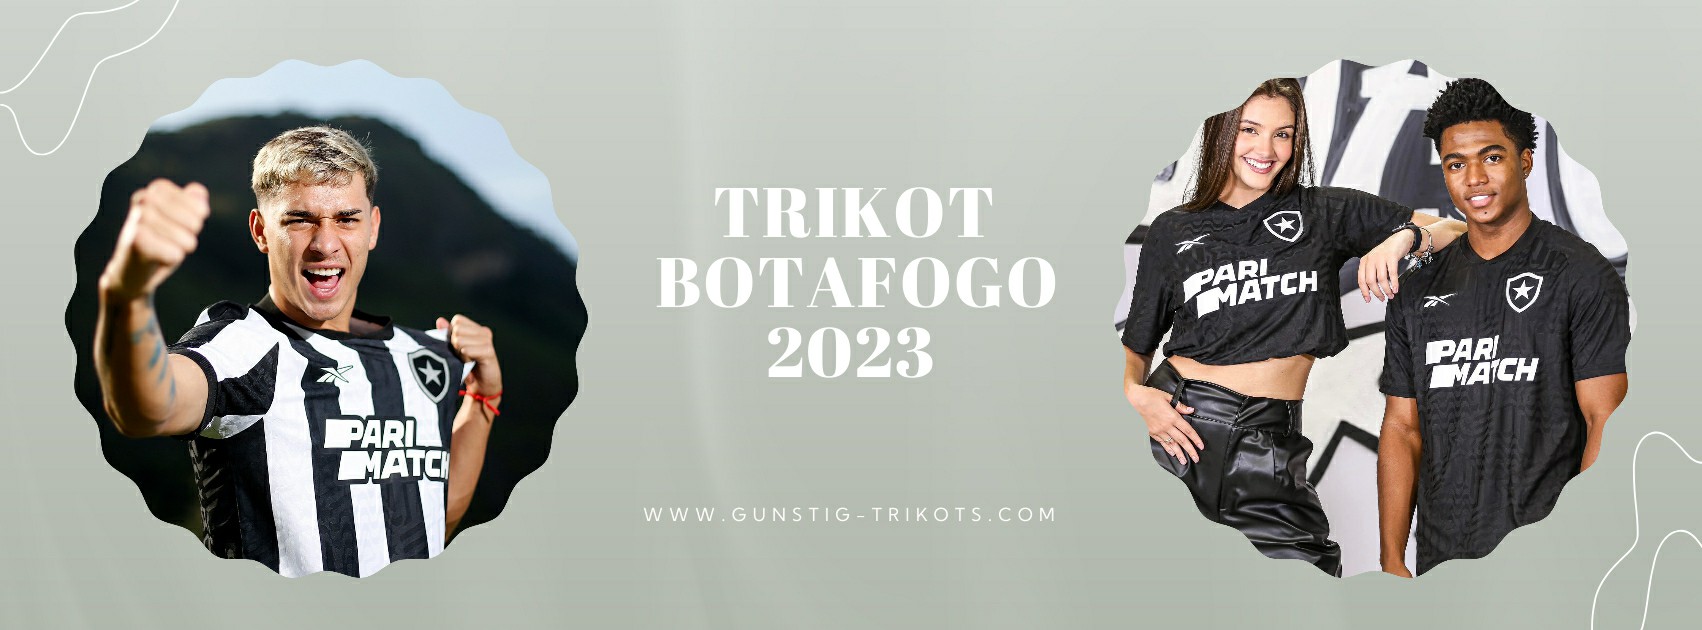 Botafogo Trikot 2023-2024